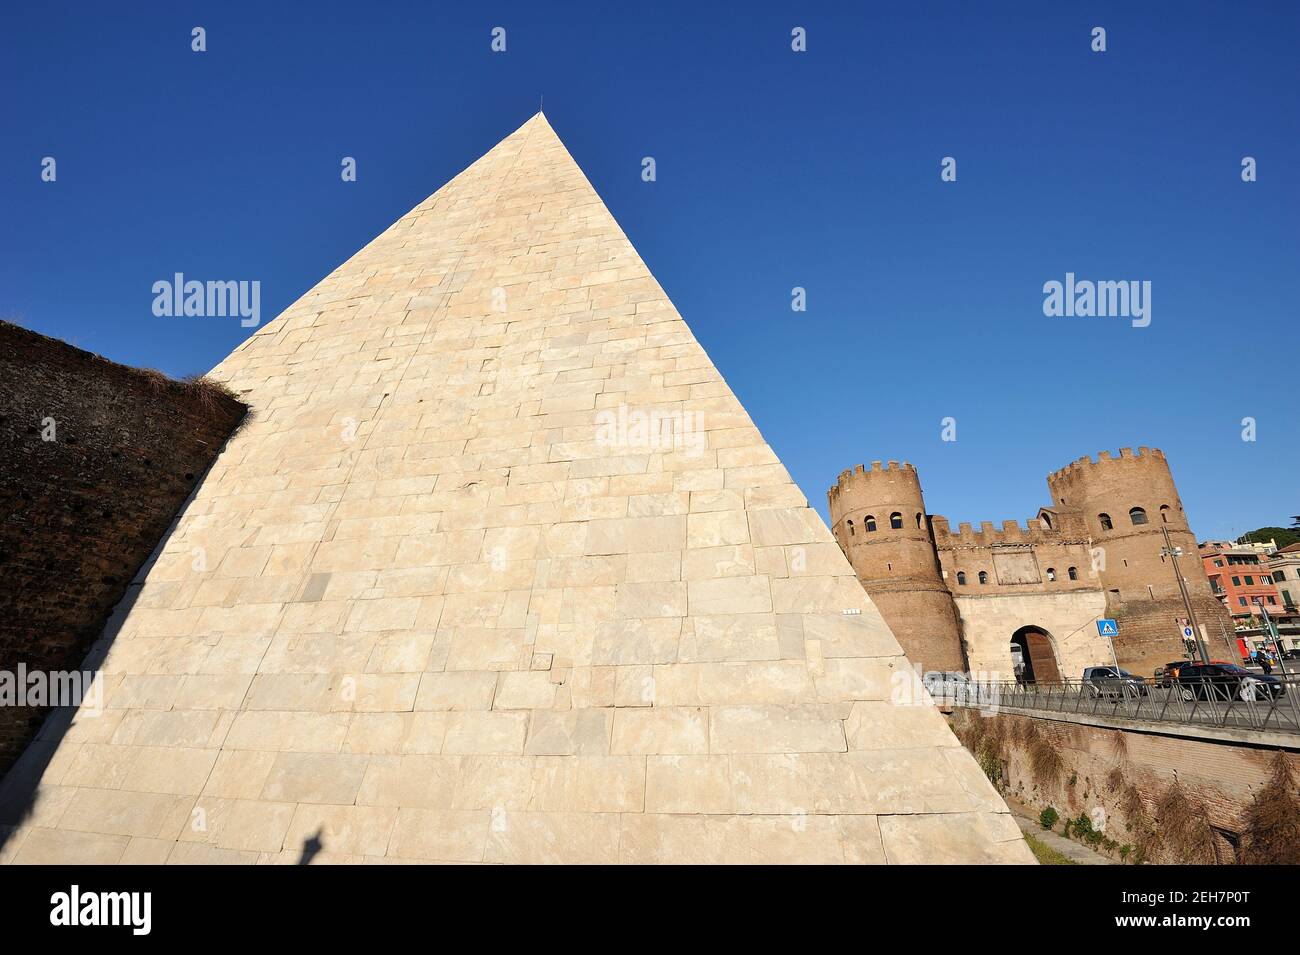 italy, rome, pyramid of caius cestius and porta san paolo Stock Photo